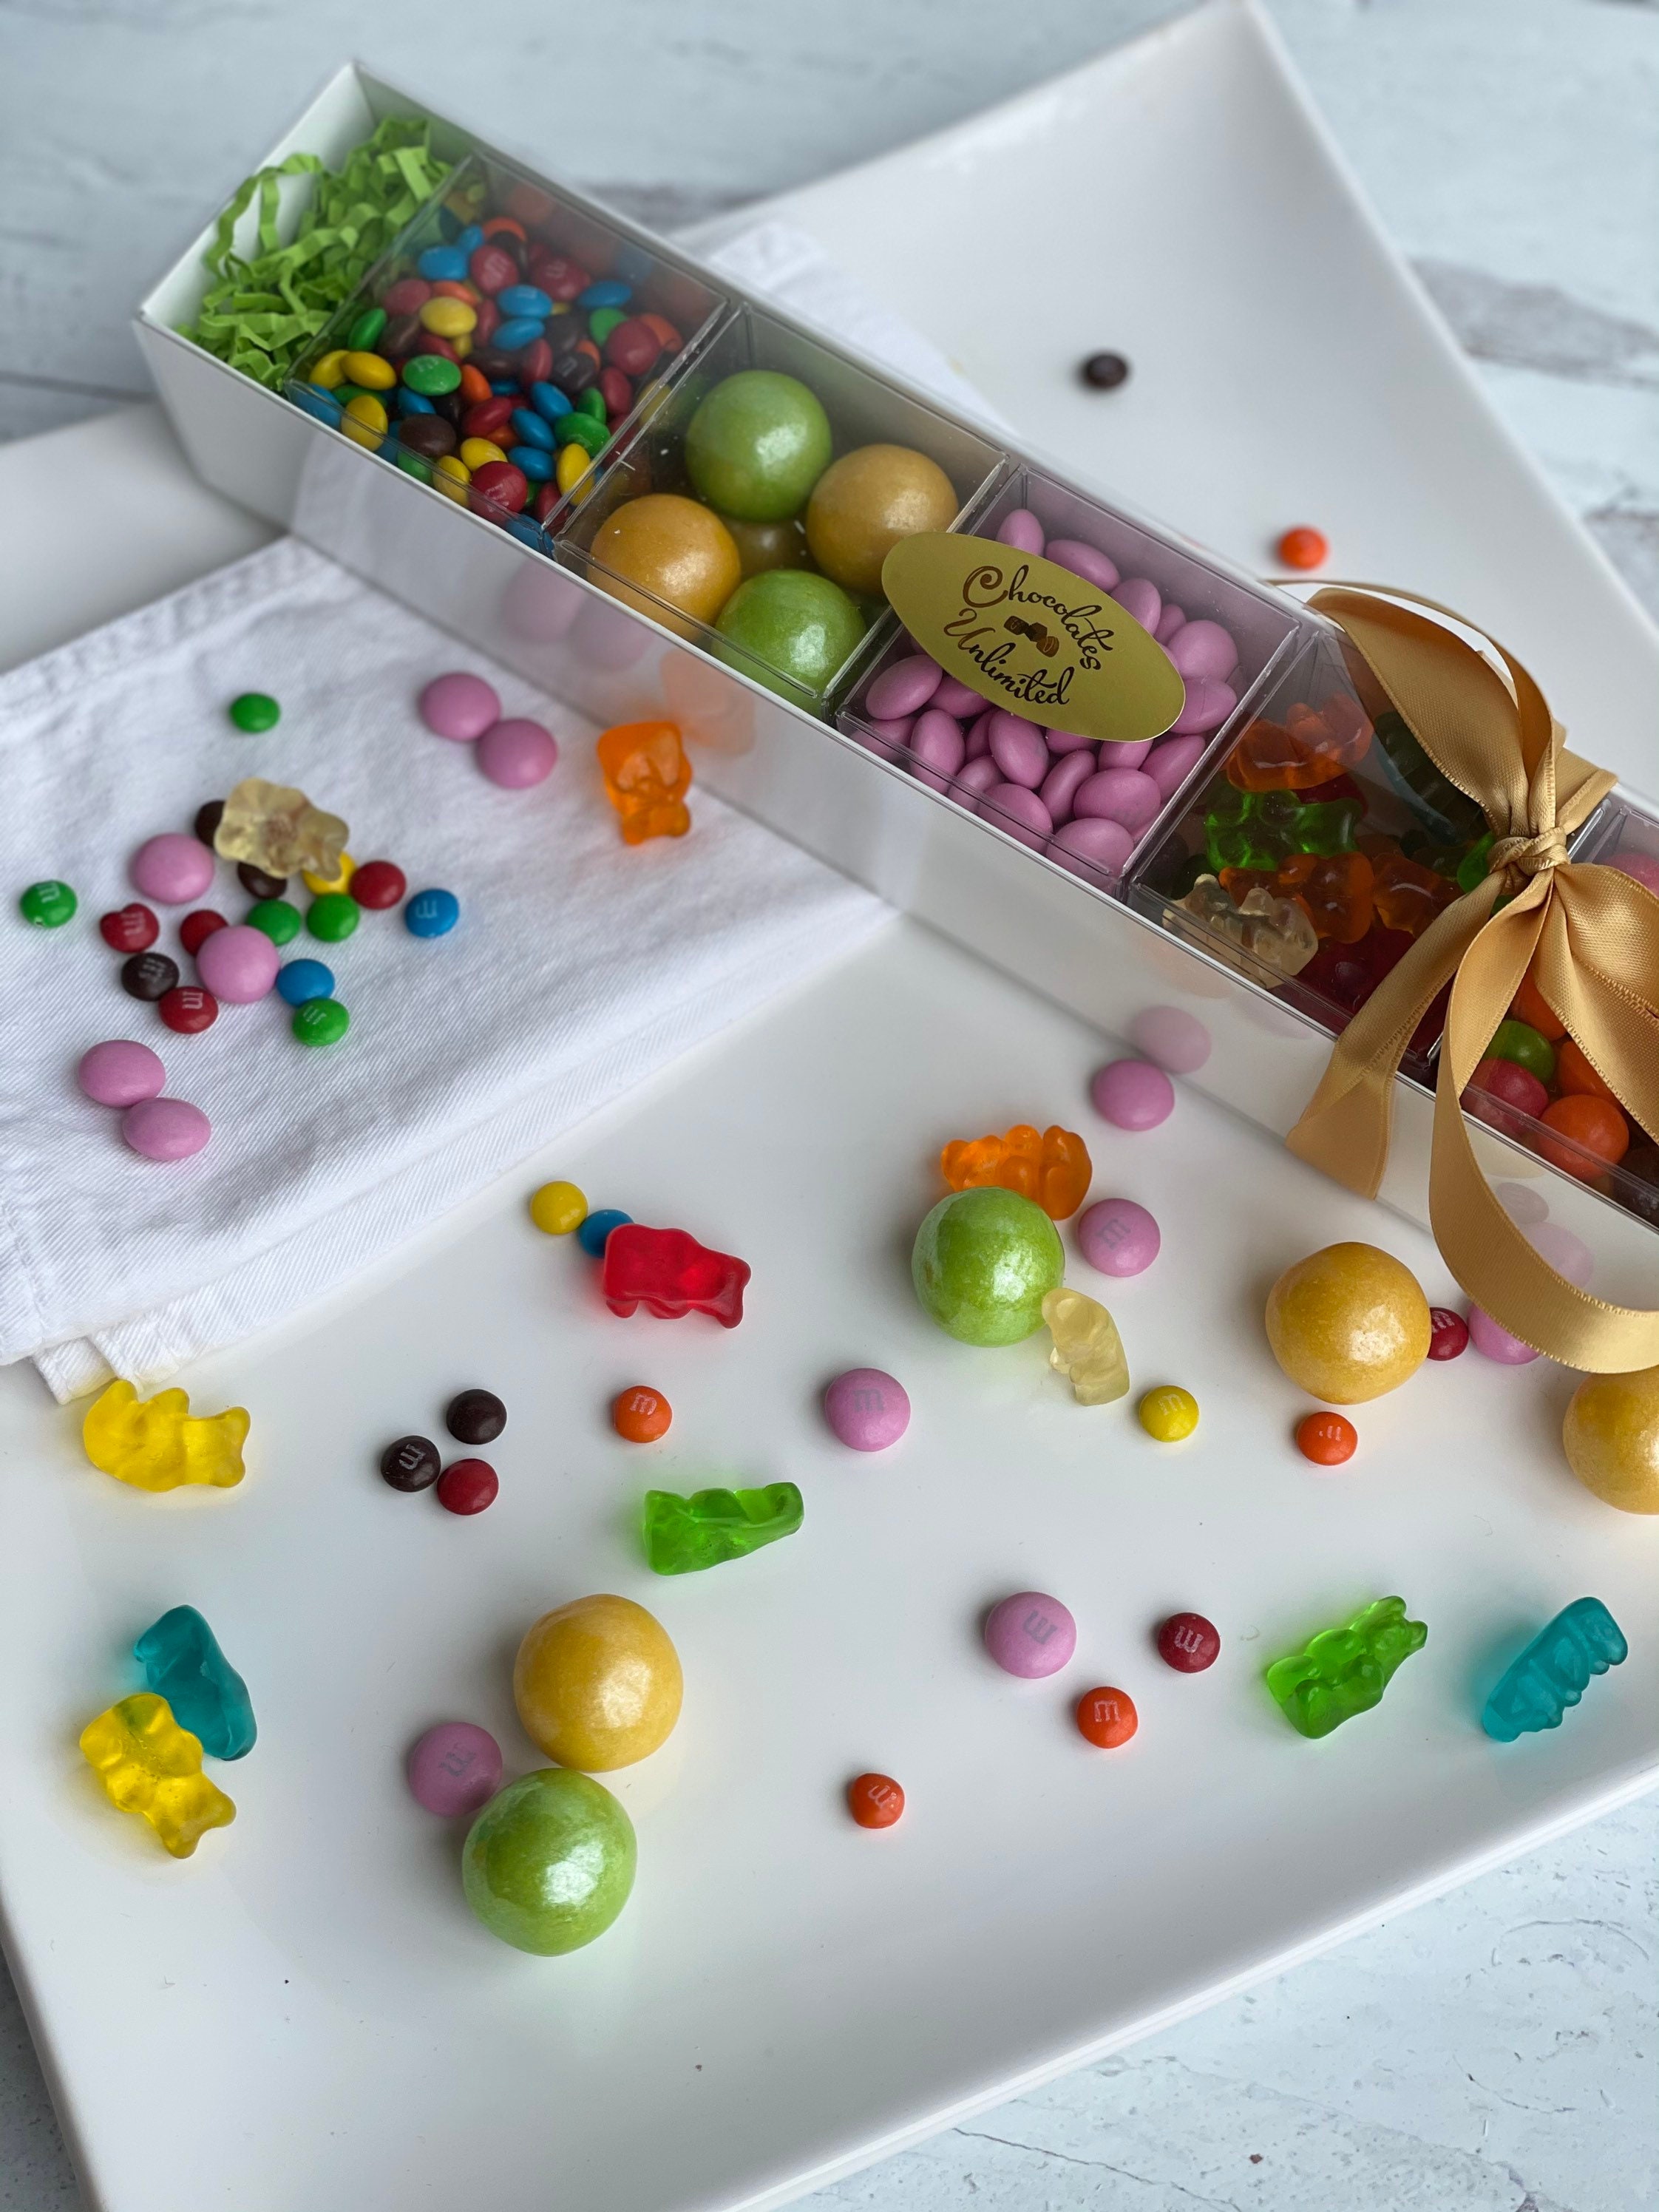 Buy Candy Organizer Box online